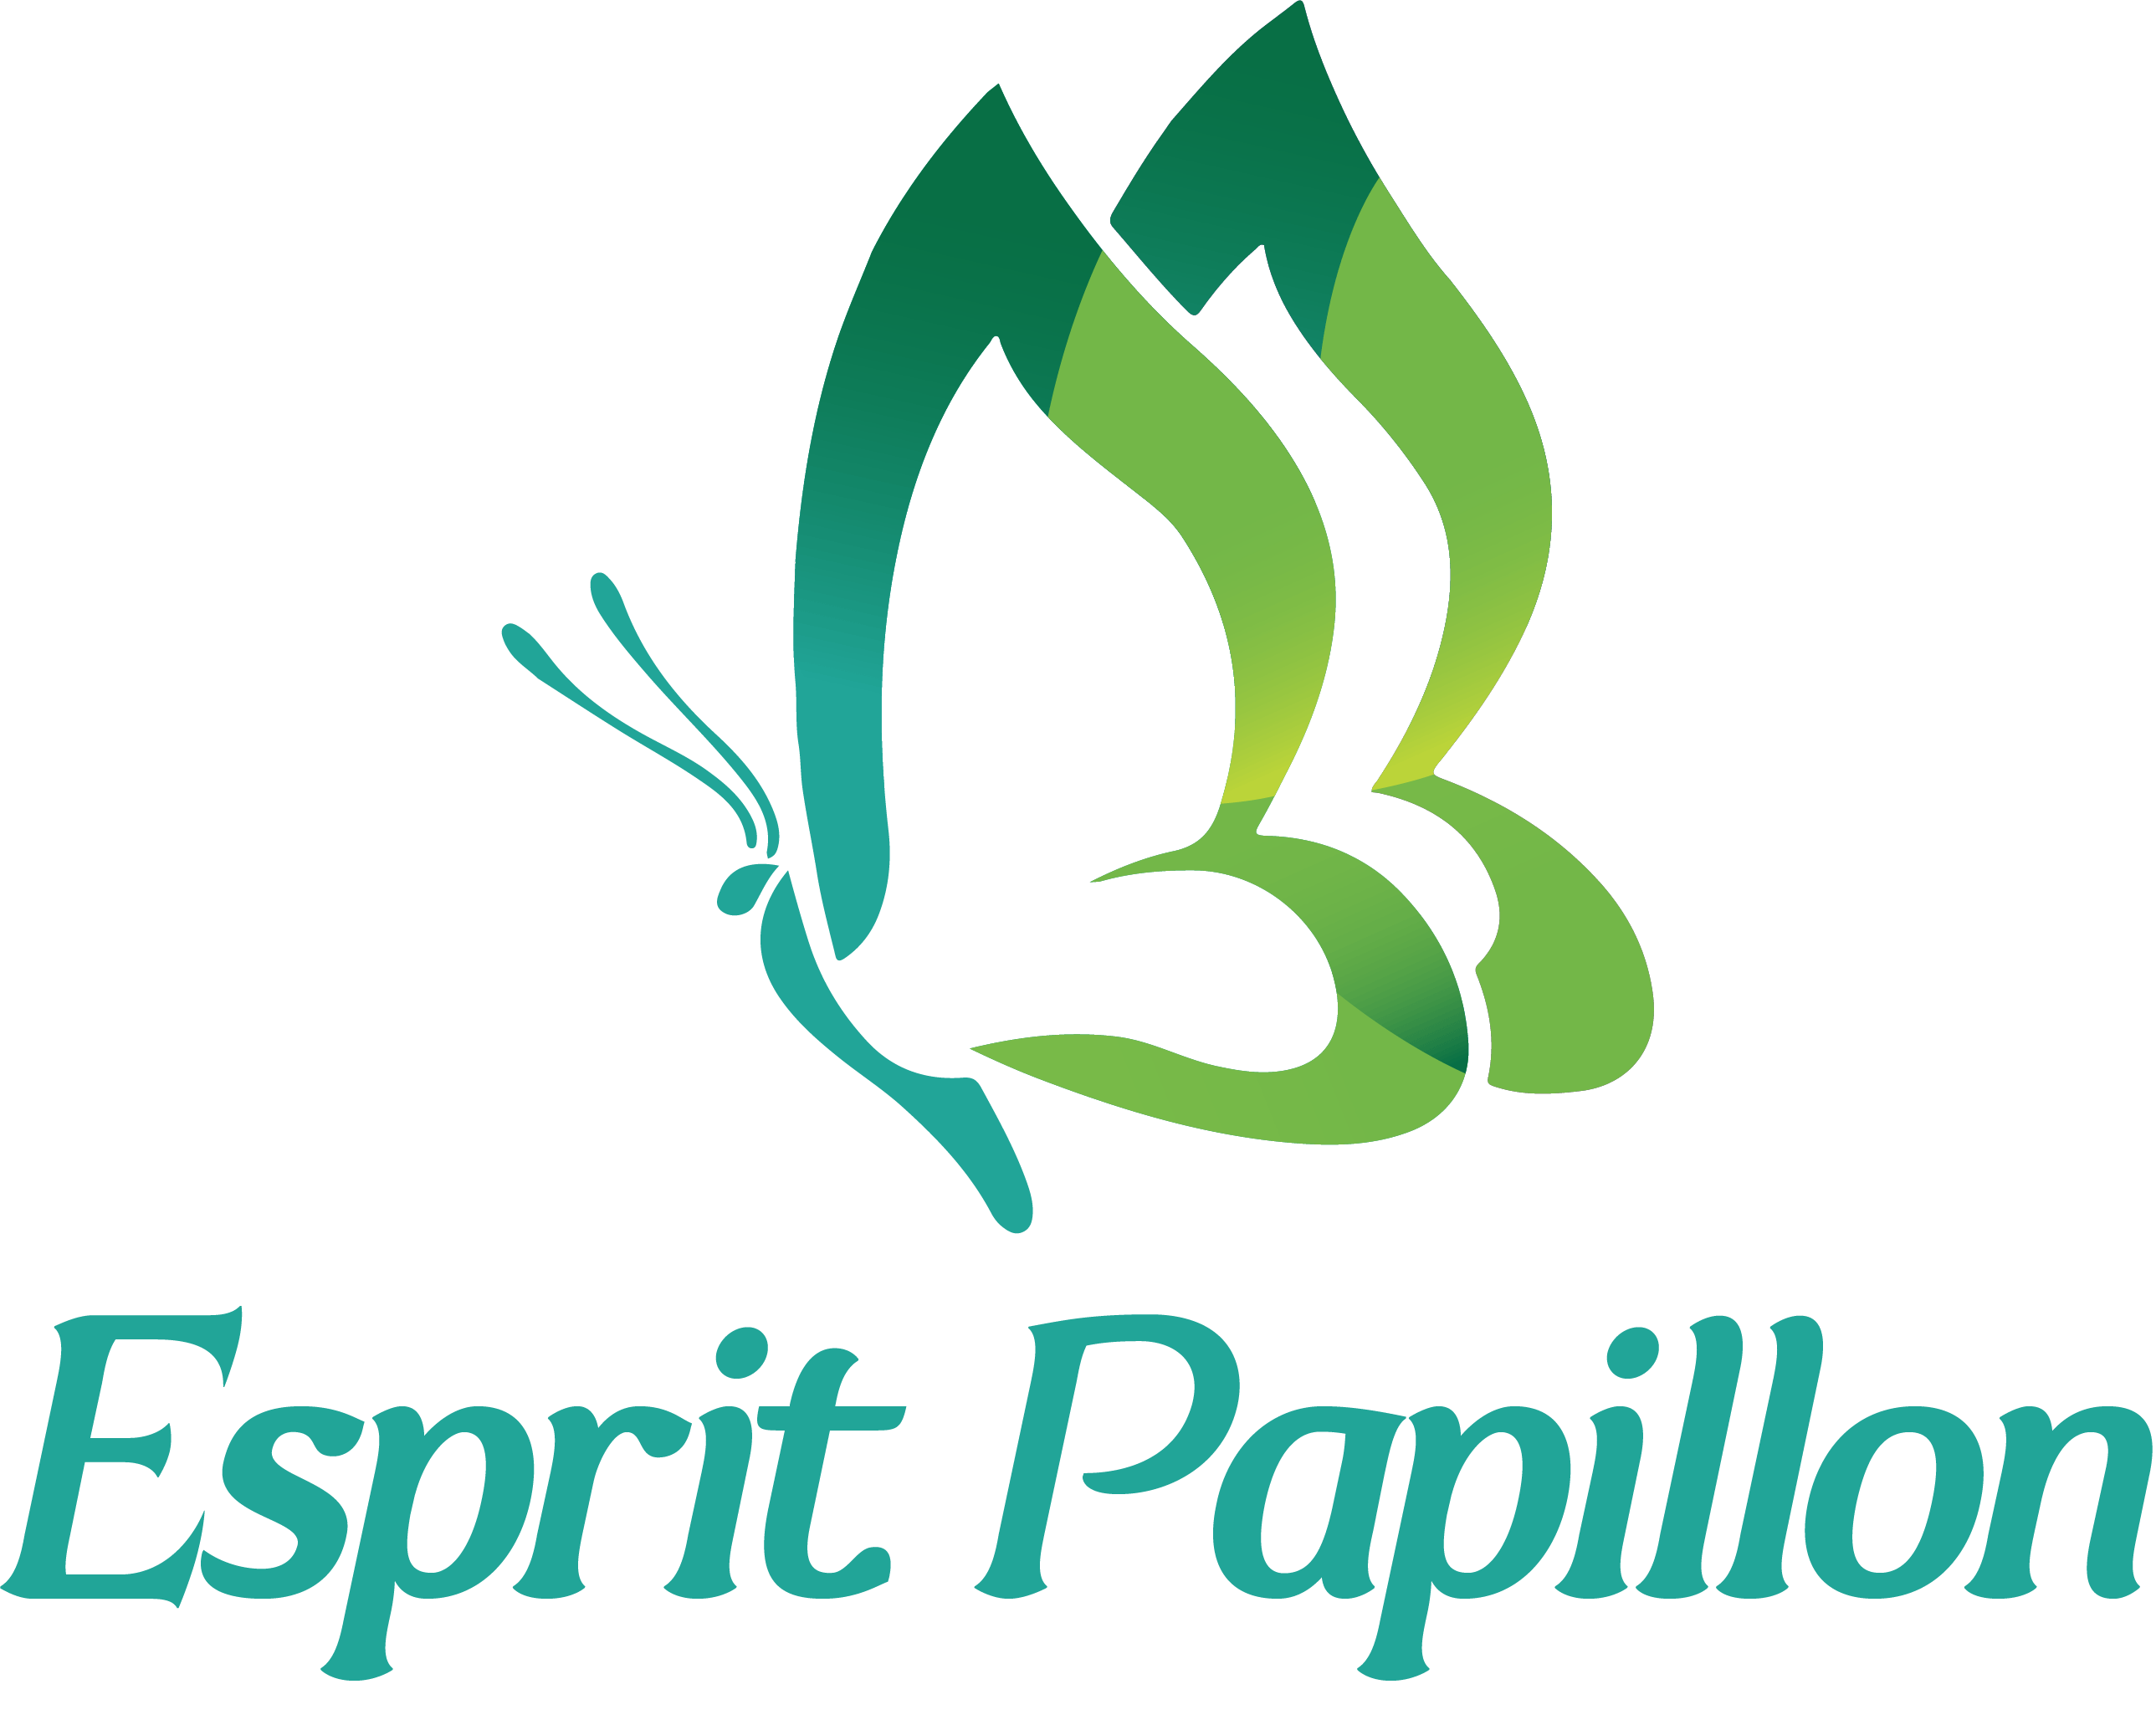 LogoEspritPapillon